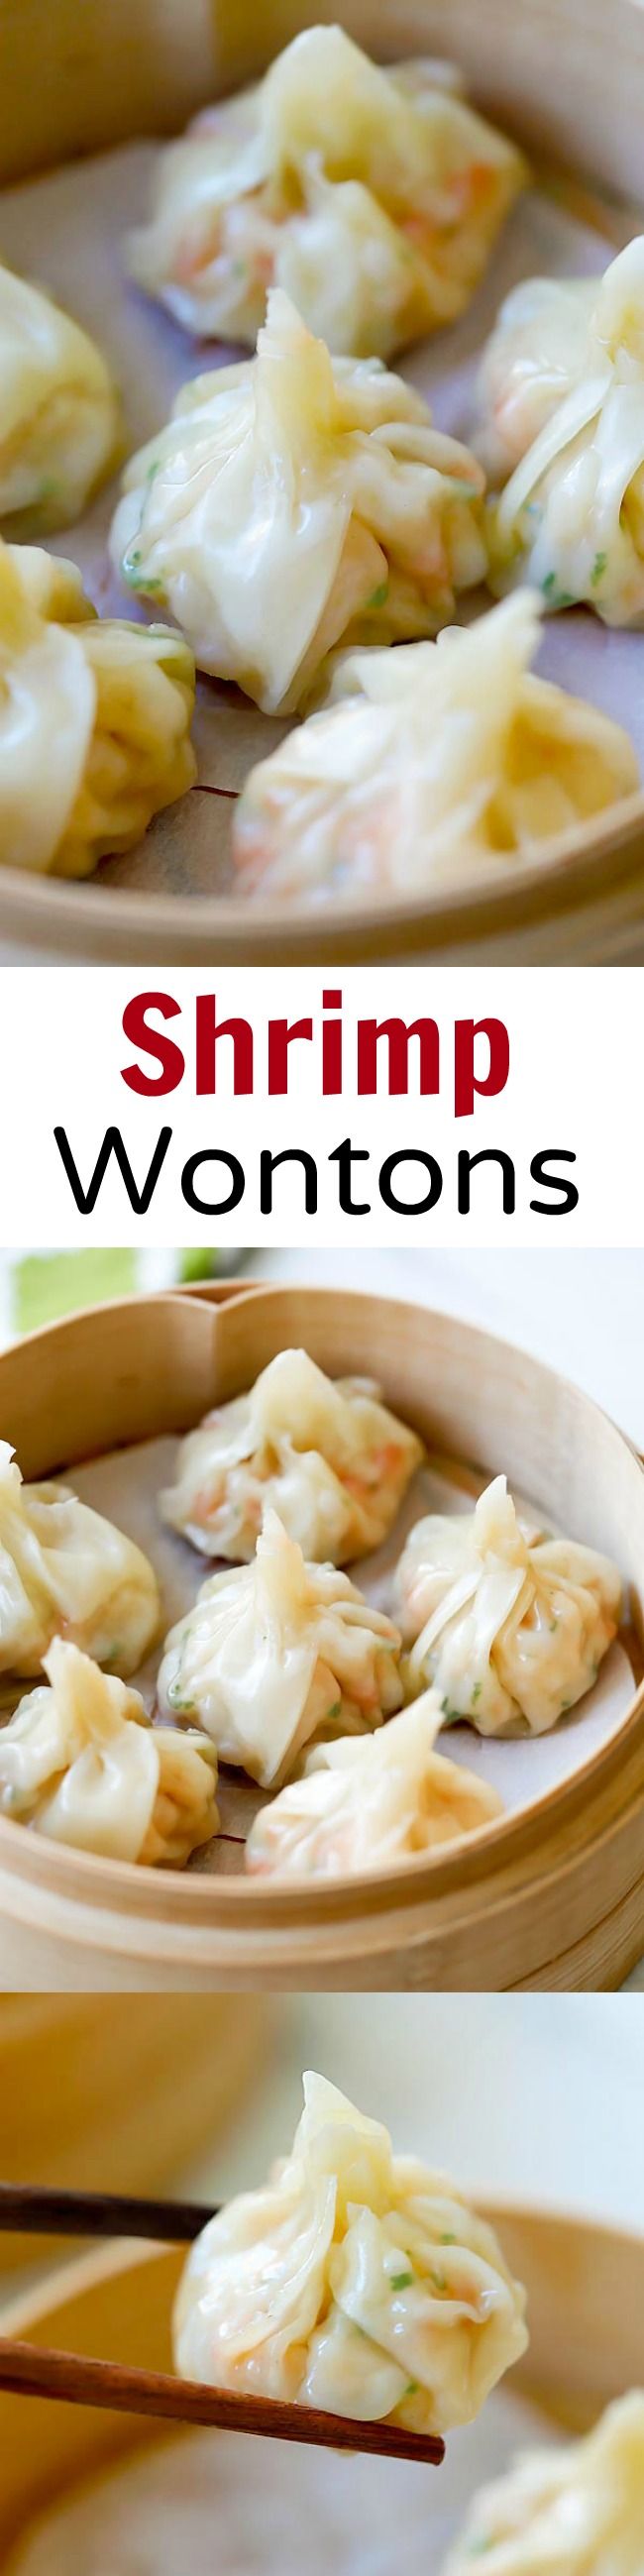 Shrimp wontons – easy peasy shrimp wontons recipe with shrimp, wrapped with wonton skin and boil/steam. SO easy & delicious!!! | rasamalaysia.com